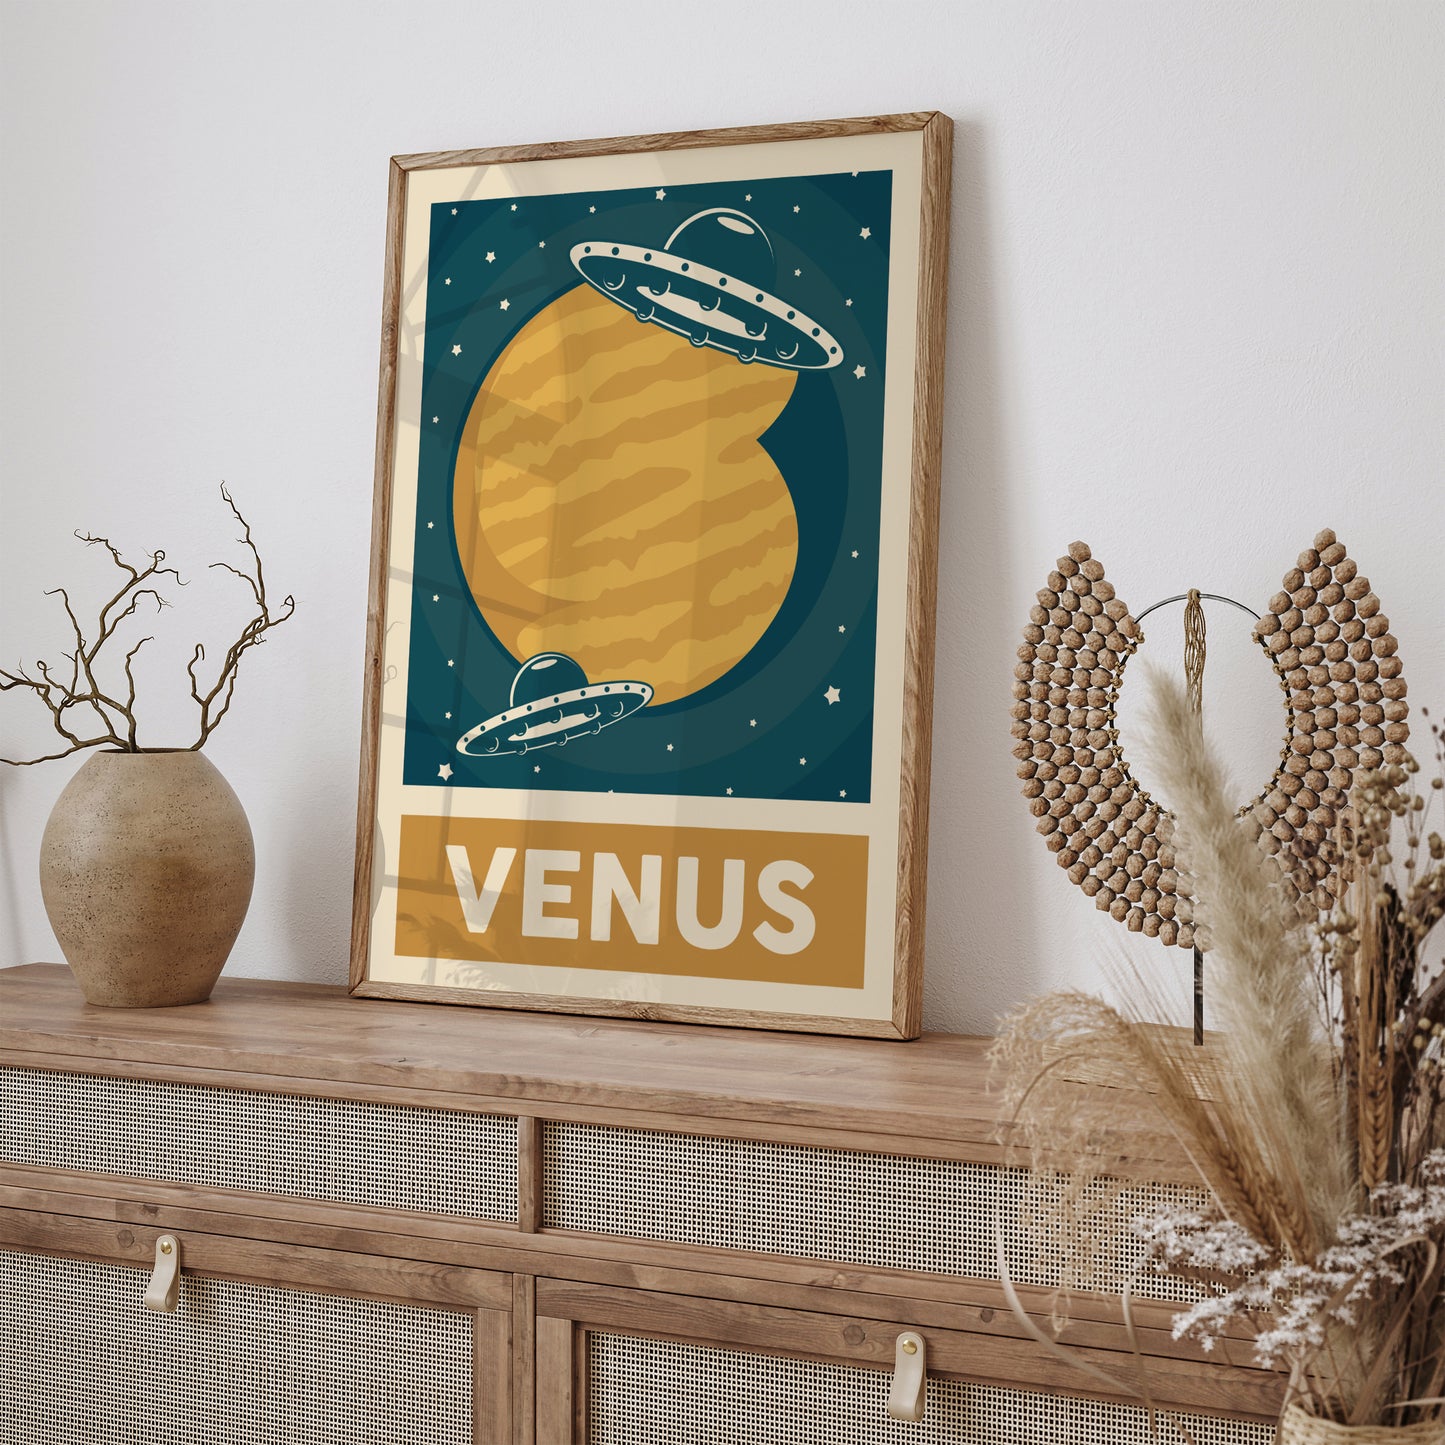 Venus Planet Space Poster